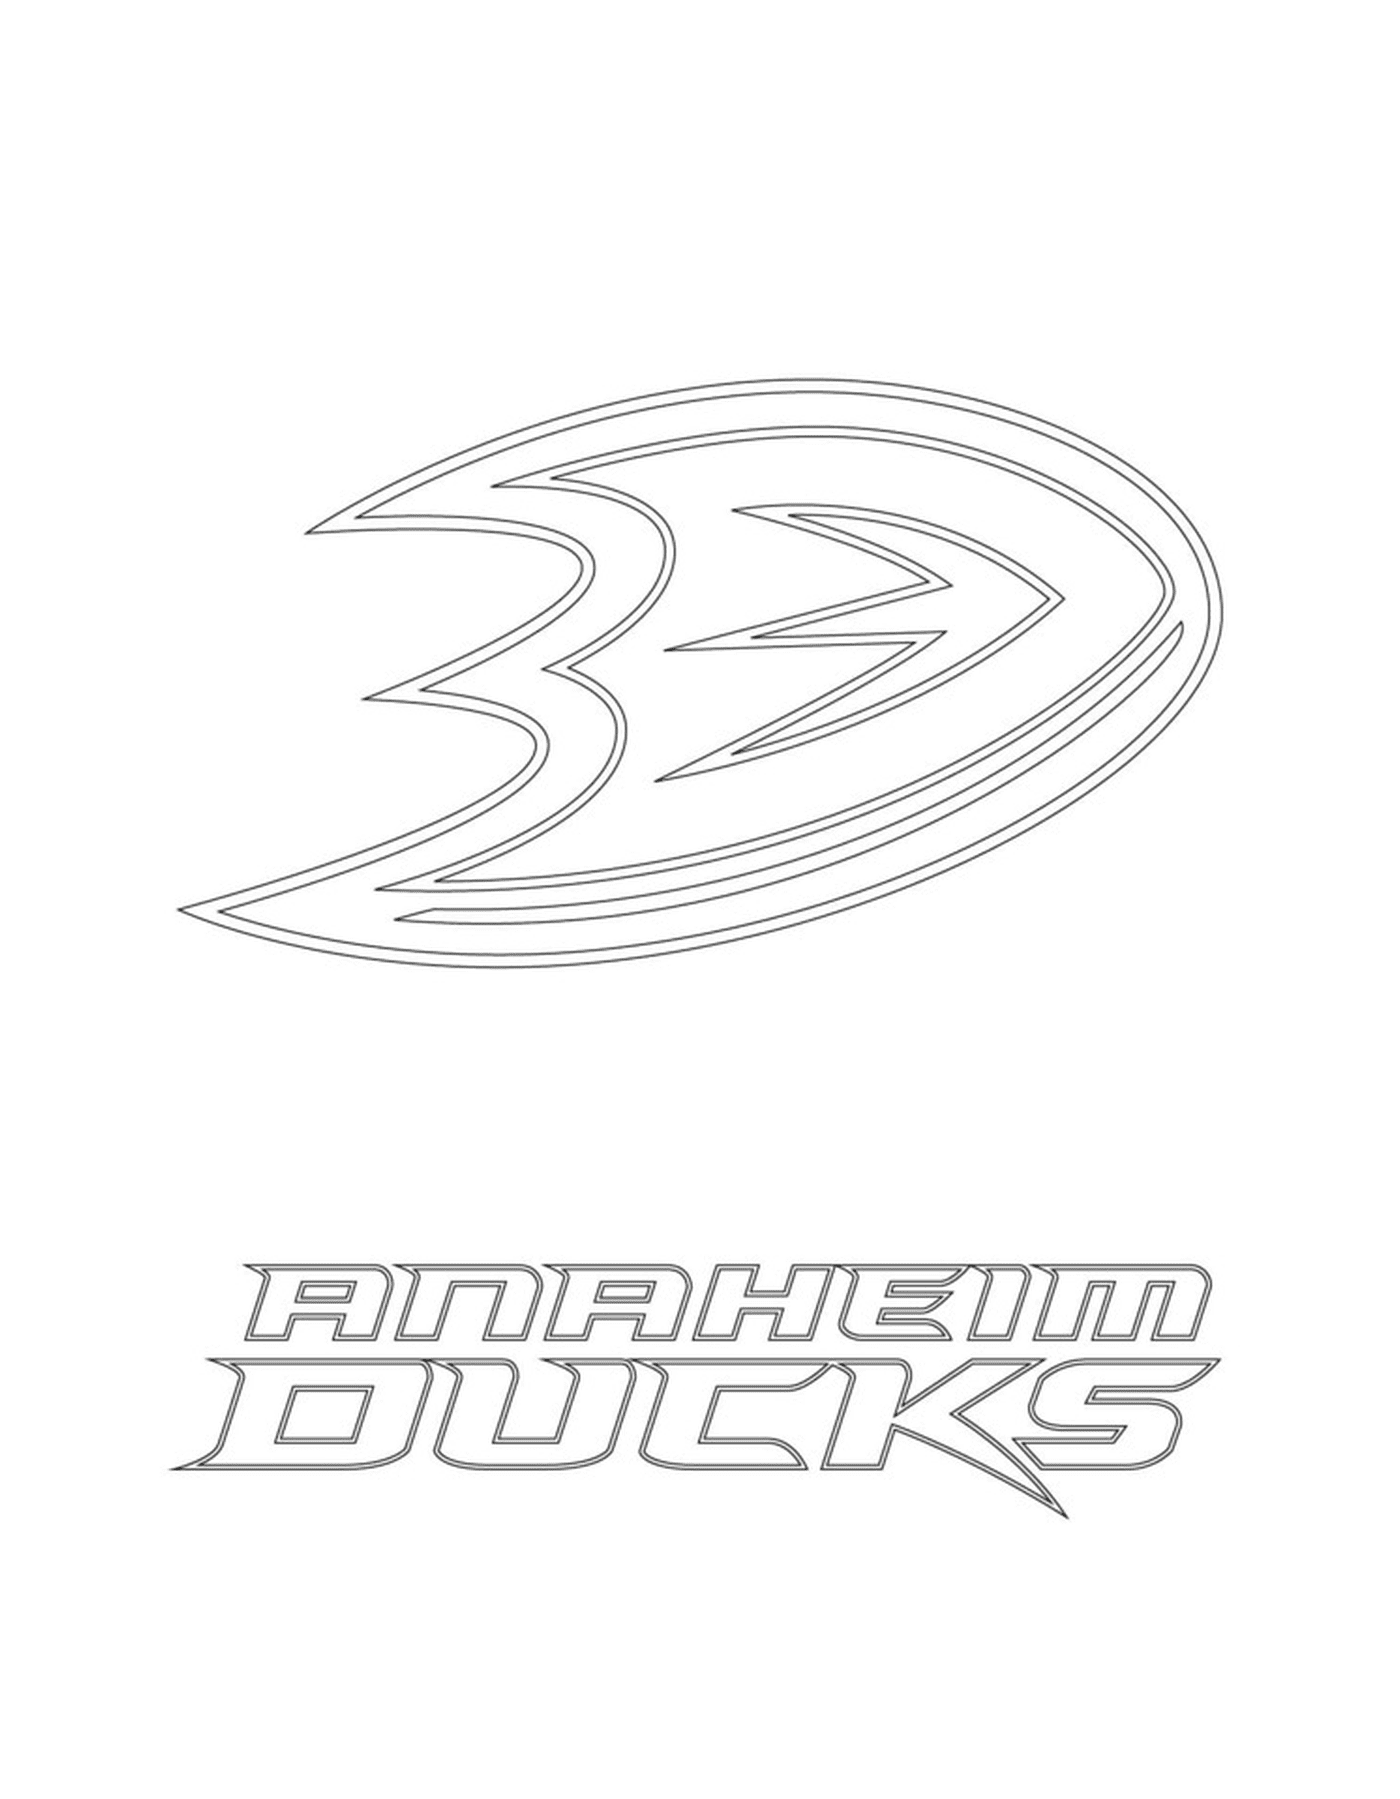  Logo of the Ducks of Anaheim 